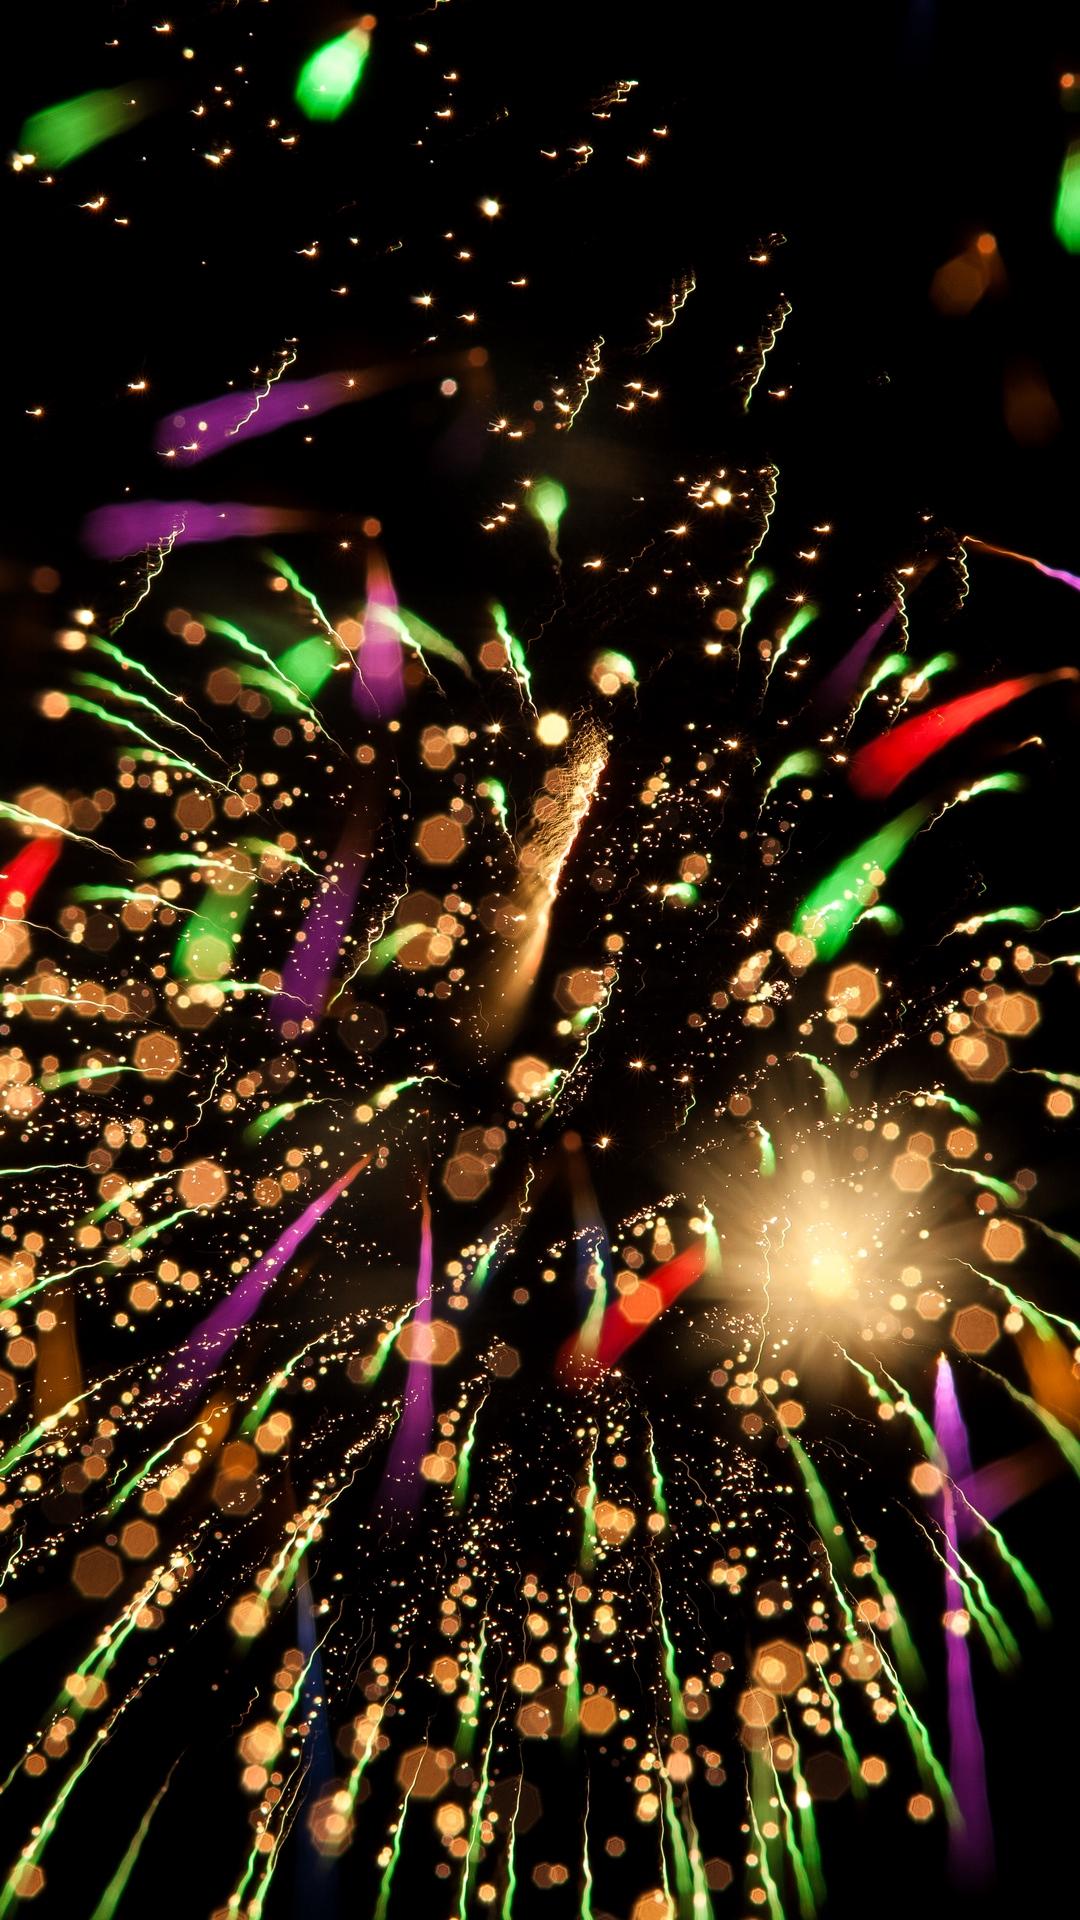 Download wallpaper 1080x1920 fireworks, sparks, colorful